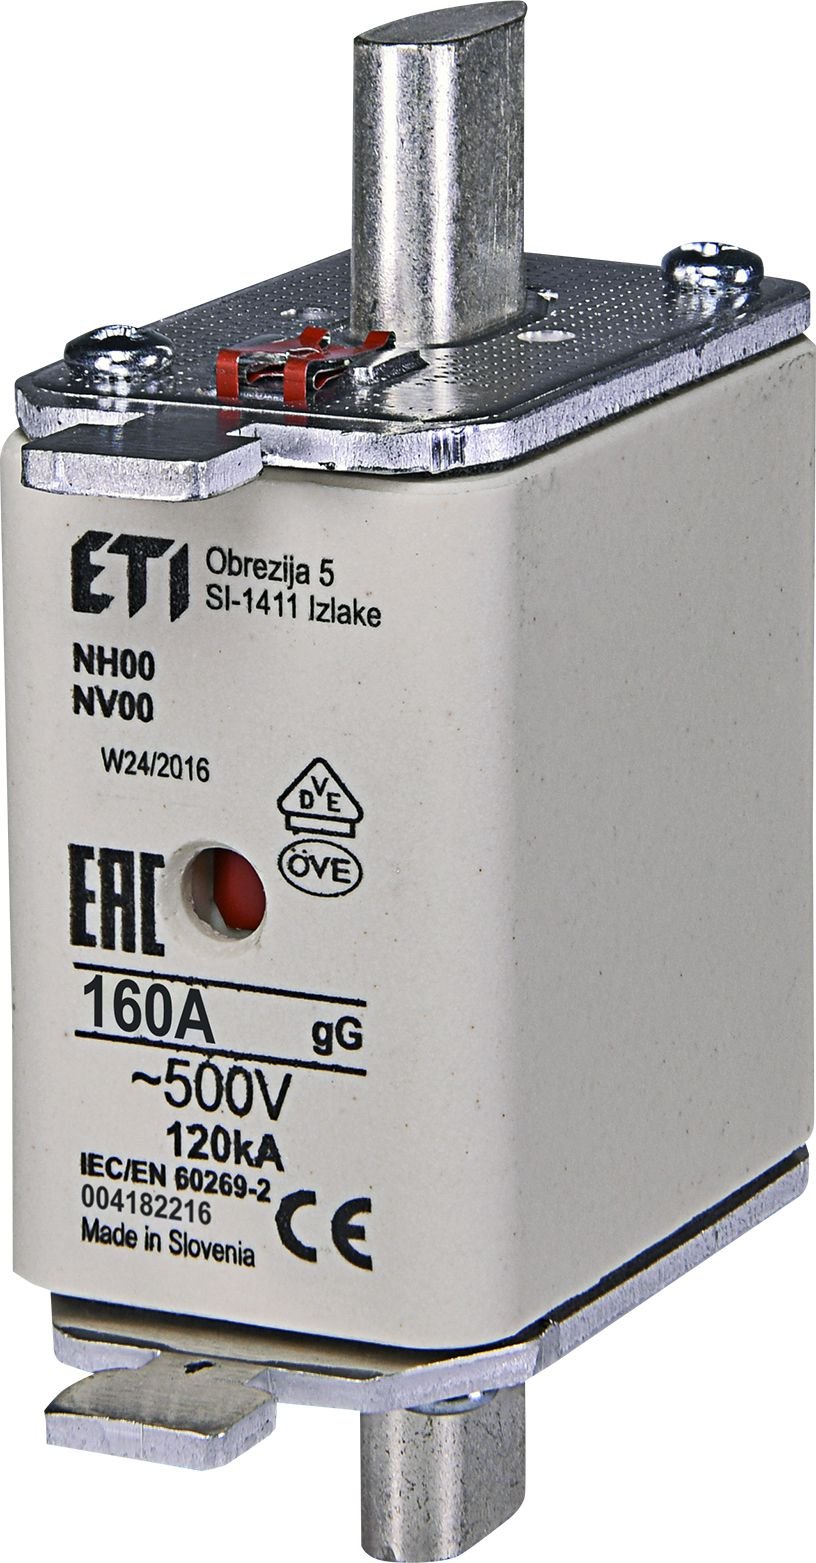 Siguranță COMBI NH00 160A gG / gL 500V WT-00 (004182216)